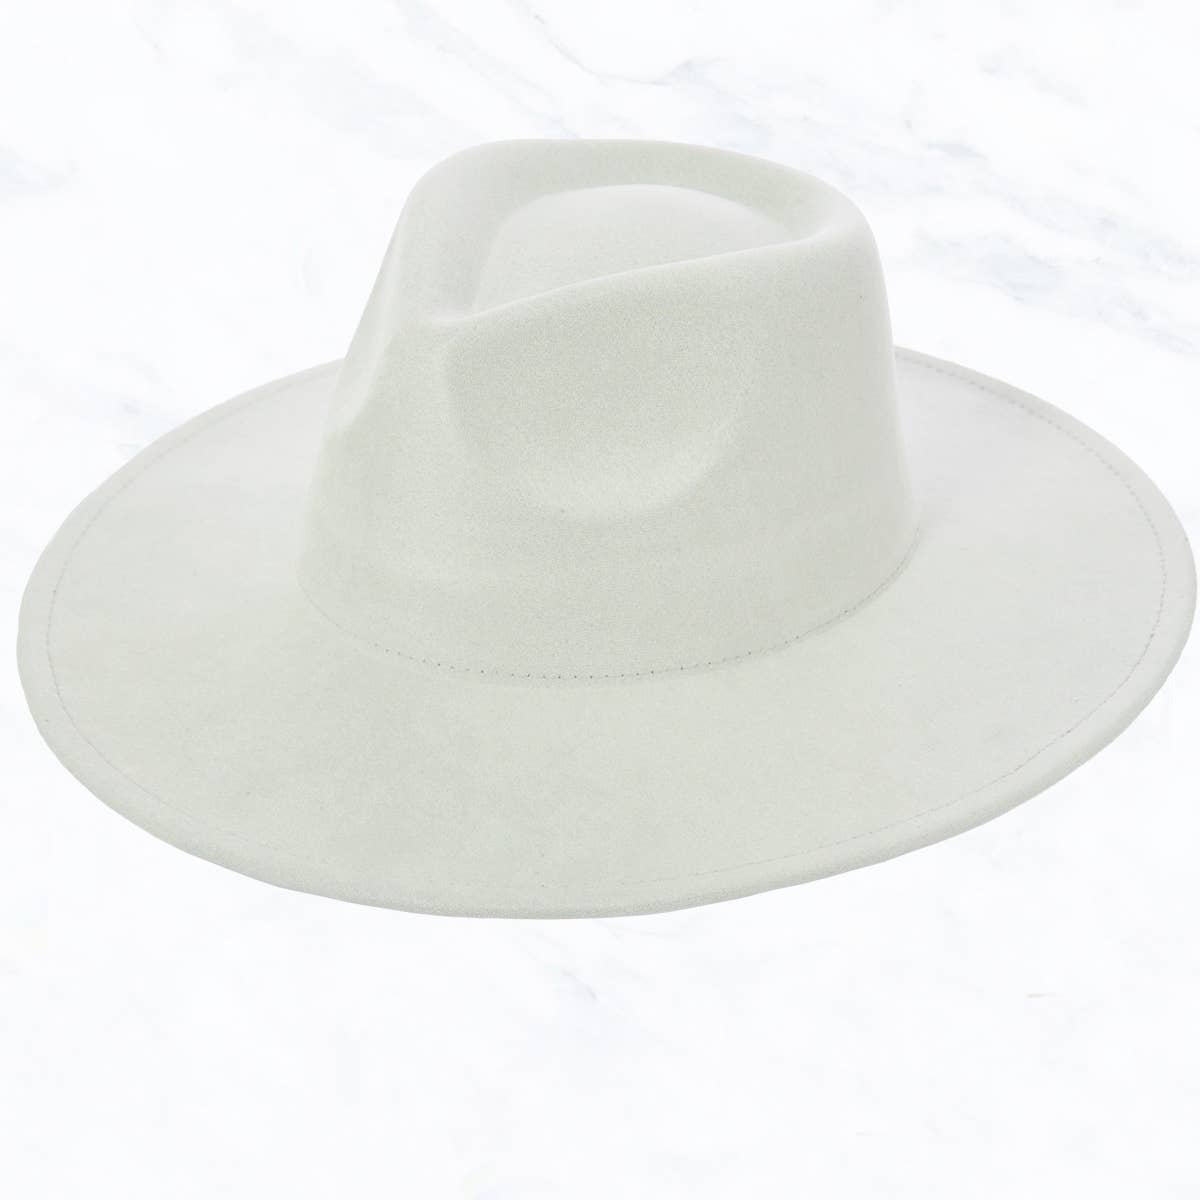 Suzie Q USA - Suede Large Eaves Teardrop Top Fedora Hat: New Beige